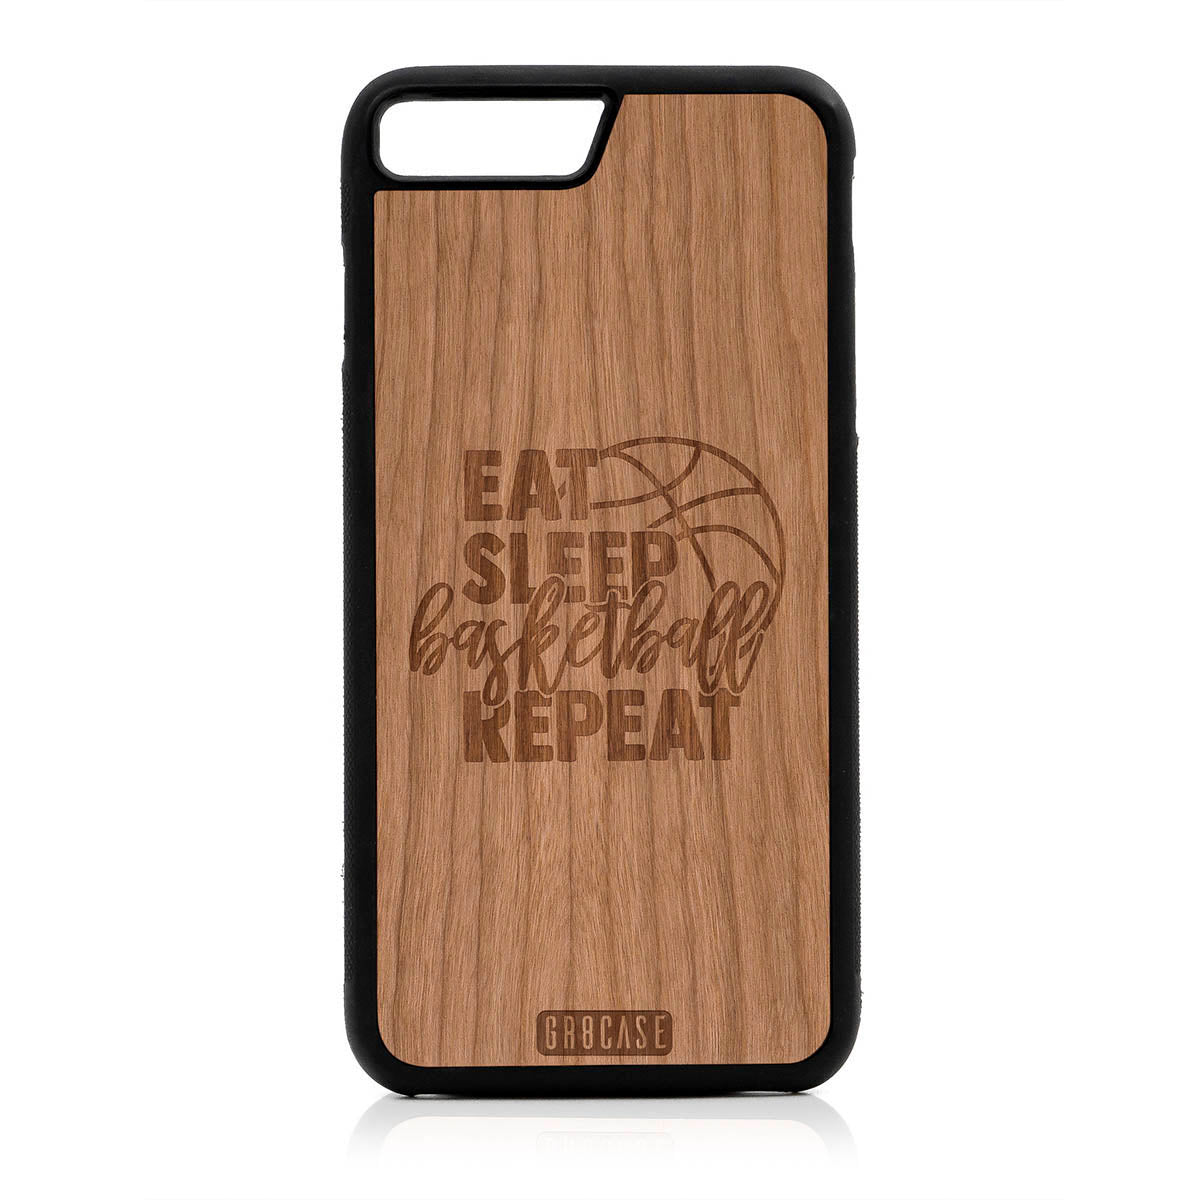 Eat Sleep Basketball Repeat Design Wood Case For iPhone 7 Plus / 8 Plus